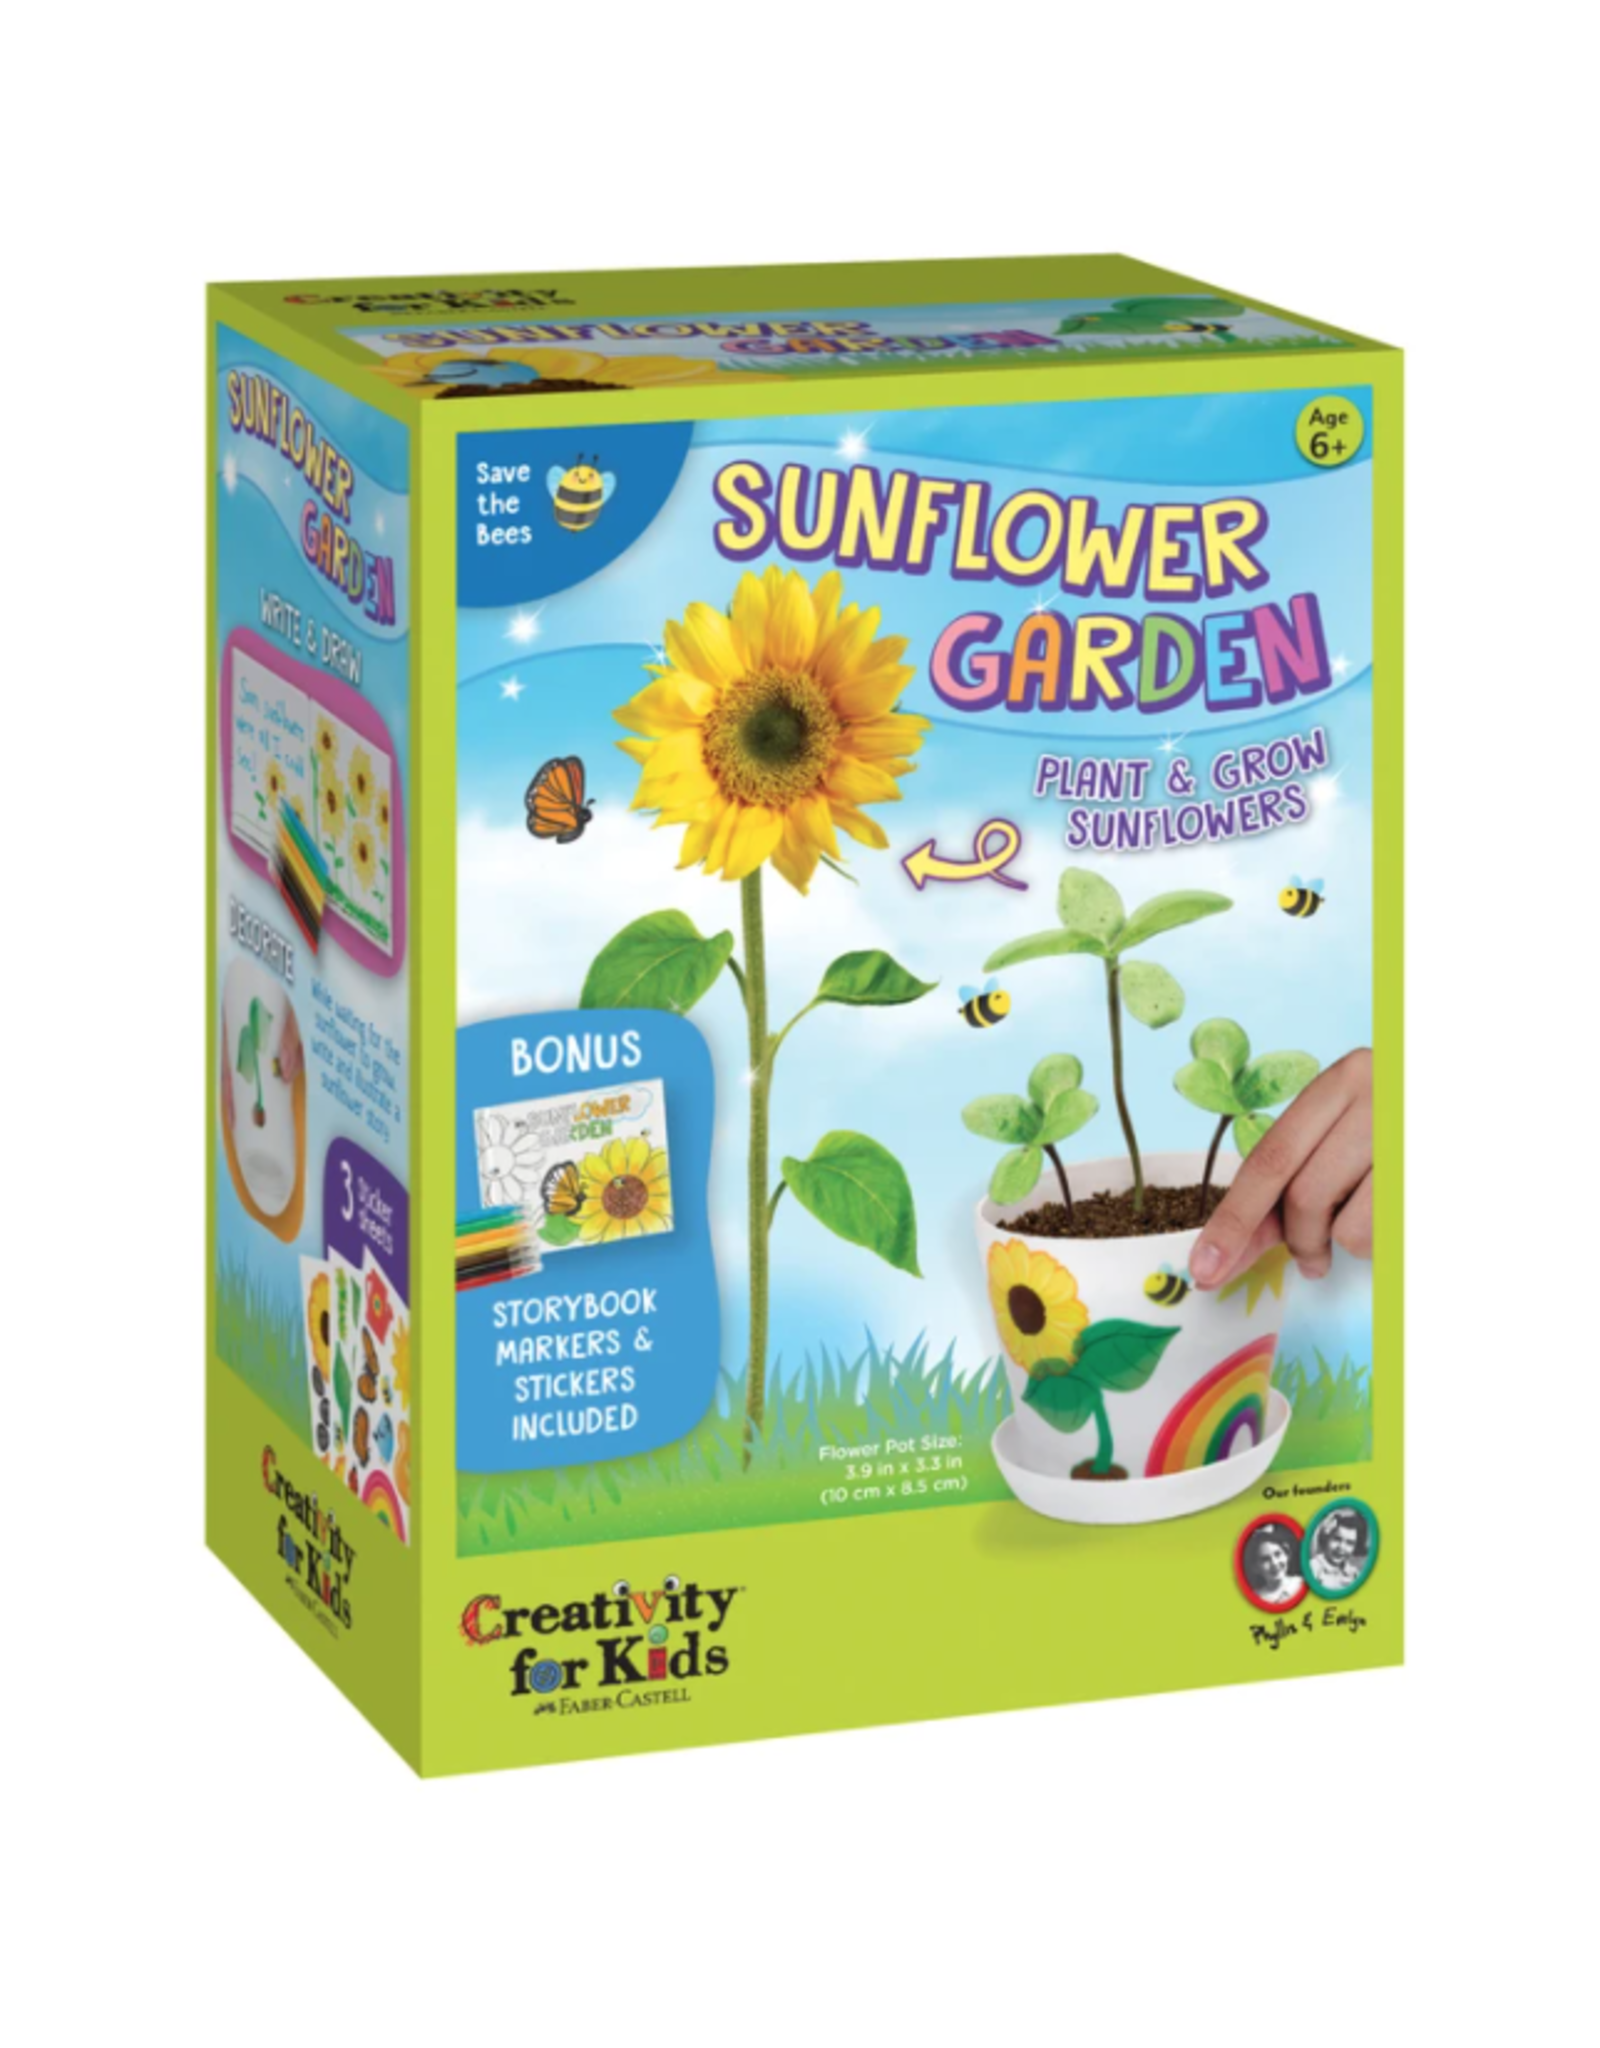 Creativity For Kids Sunflower Garden